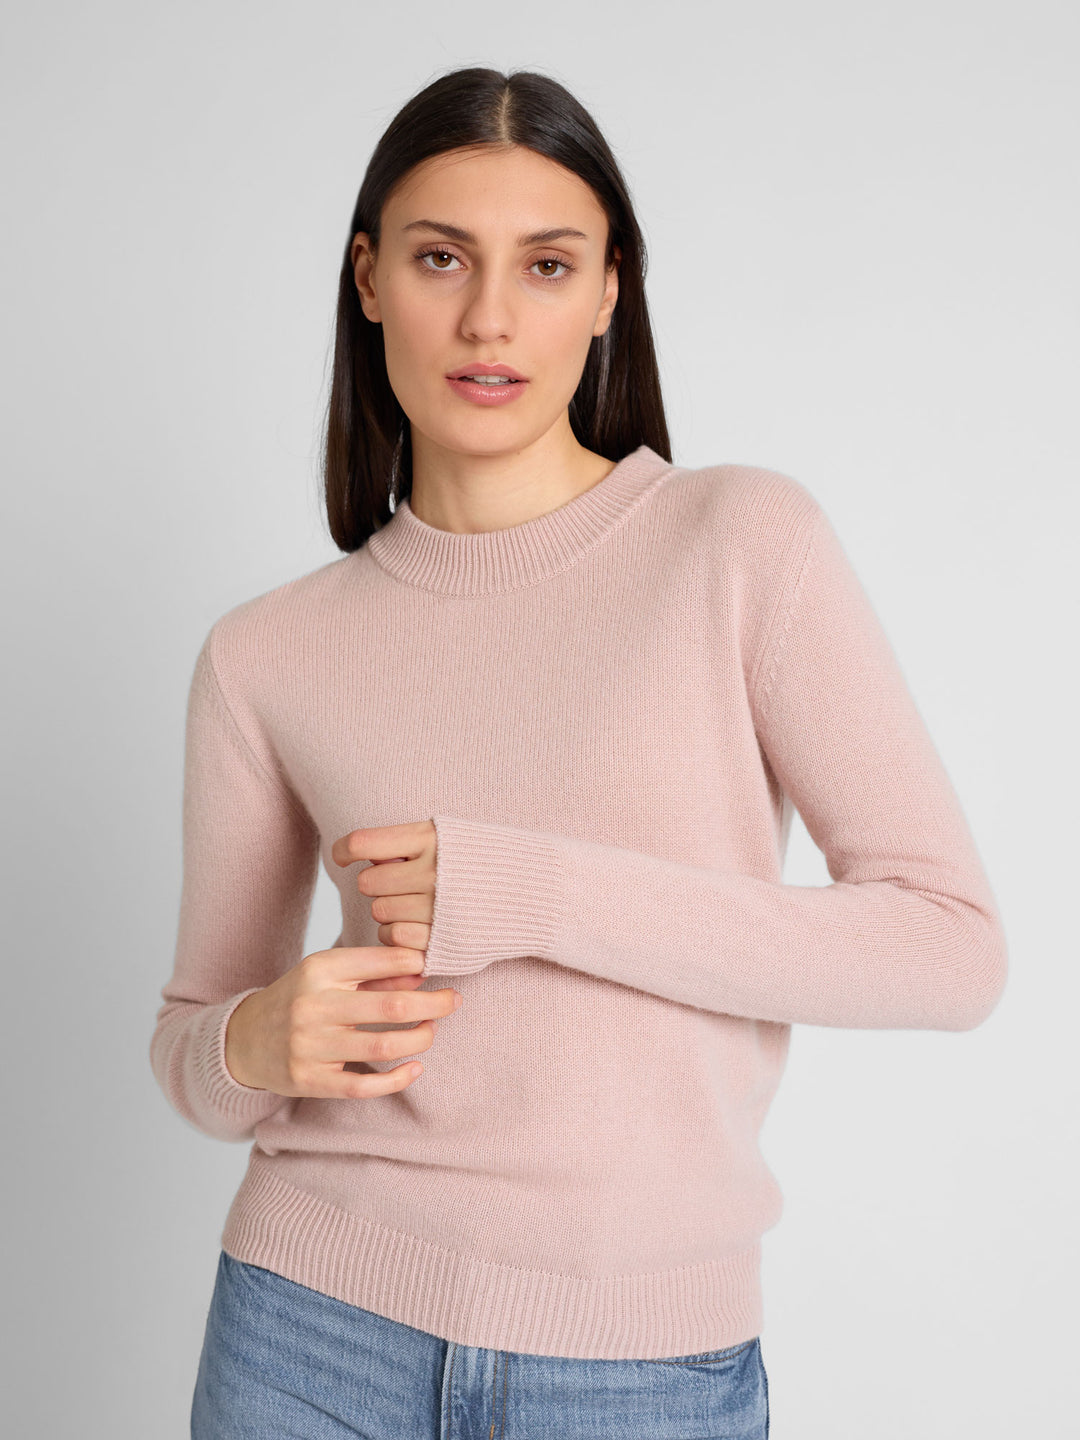 Cashmere round neck sweater Sofia Long beige 100% pure cashmere. Scandinavian design. Color: rose glow